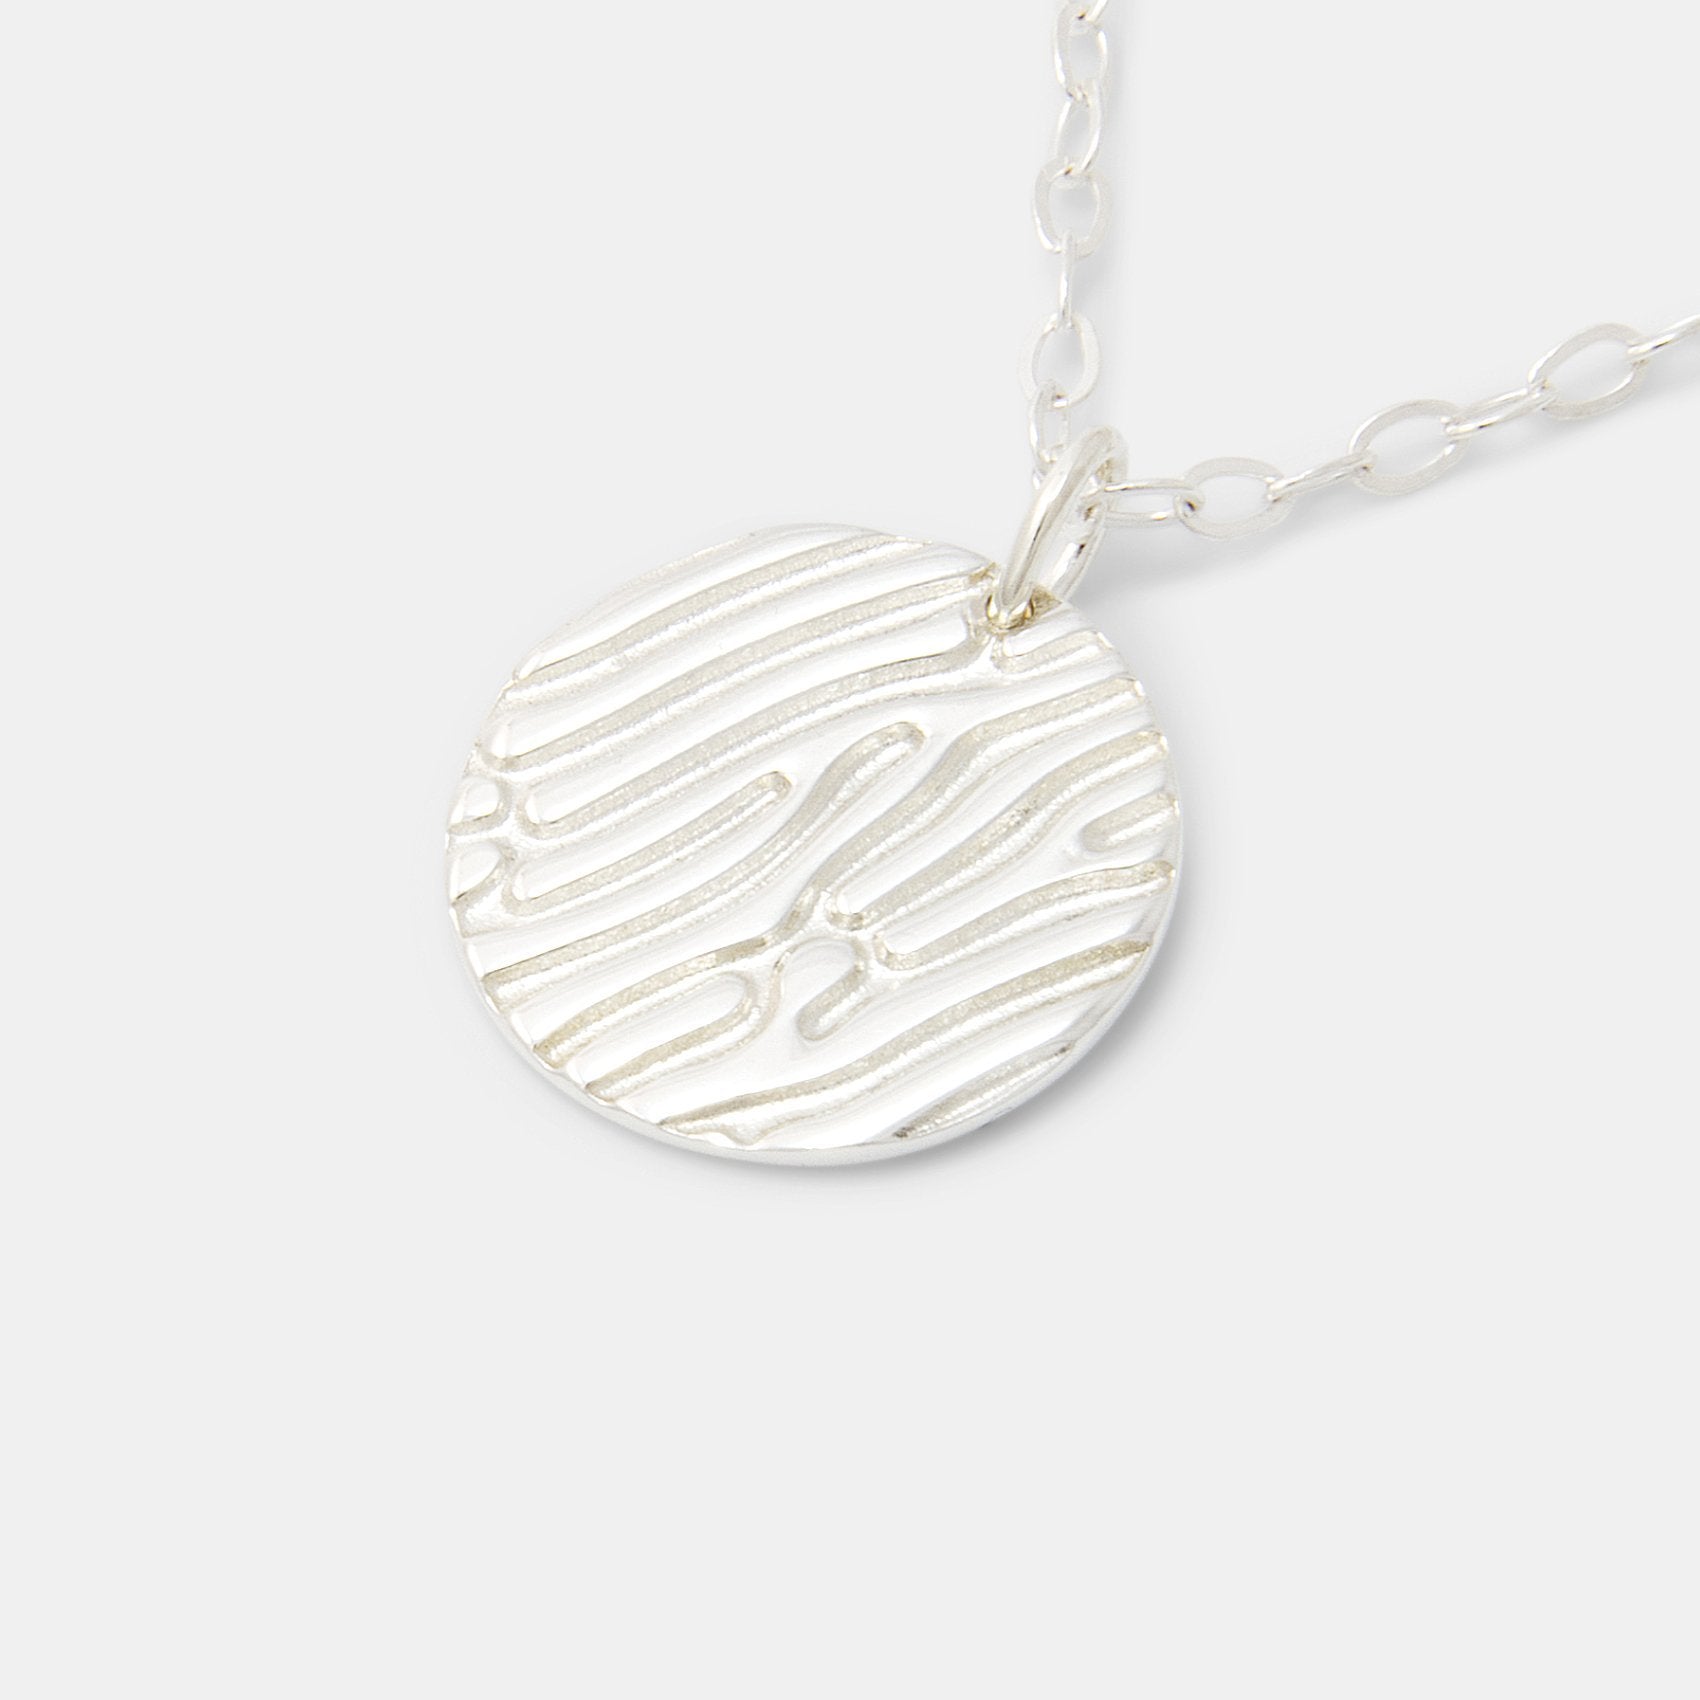 Sand texture silver pendant necklace - Simone Walsh Jewellery Australia